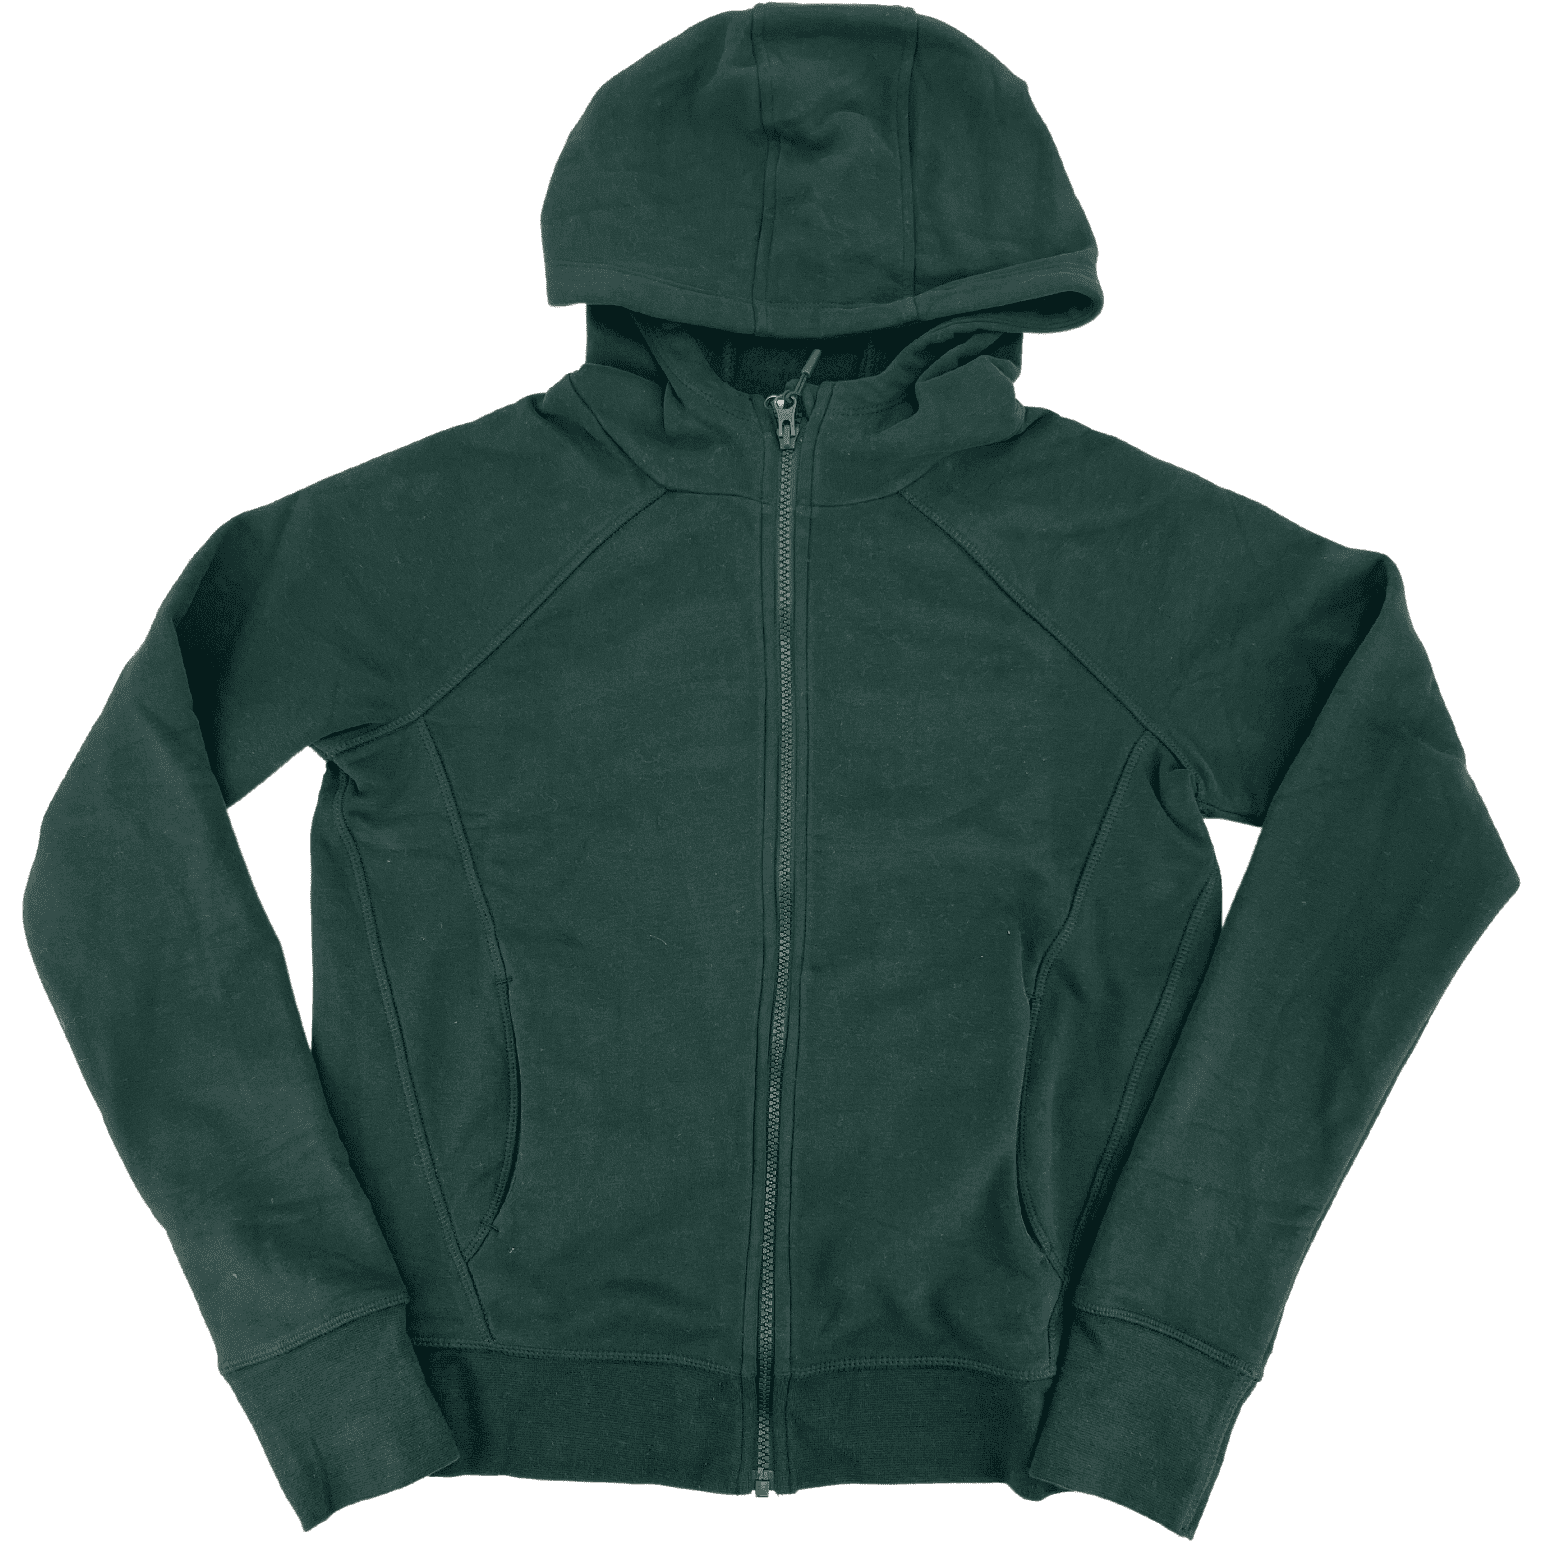 Lole Women's Sweater / Zip Up Sweater / Dark Green / Size Small